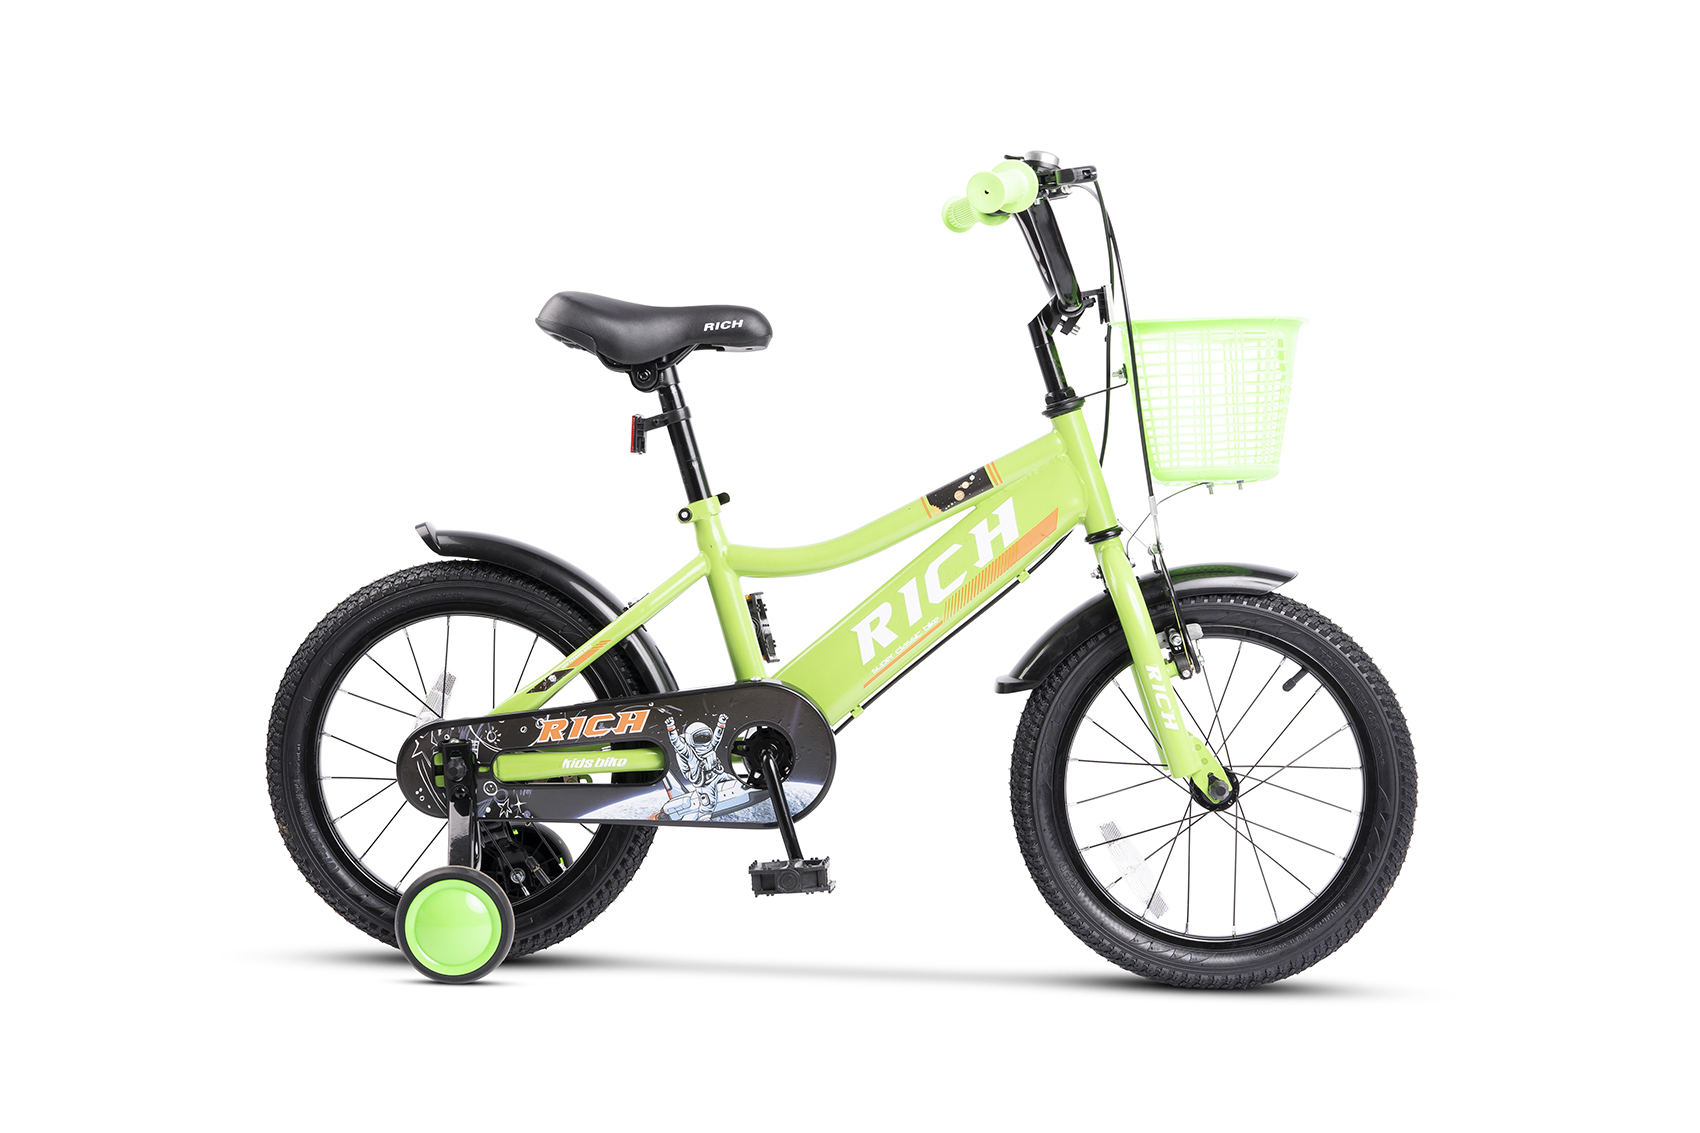 PROMO BICICLETE - Bicicleta Copii 3-5 ani Rich R1405A 14", Verde/Alb, https:carpatsport.ro